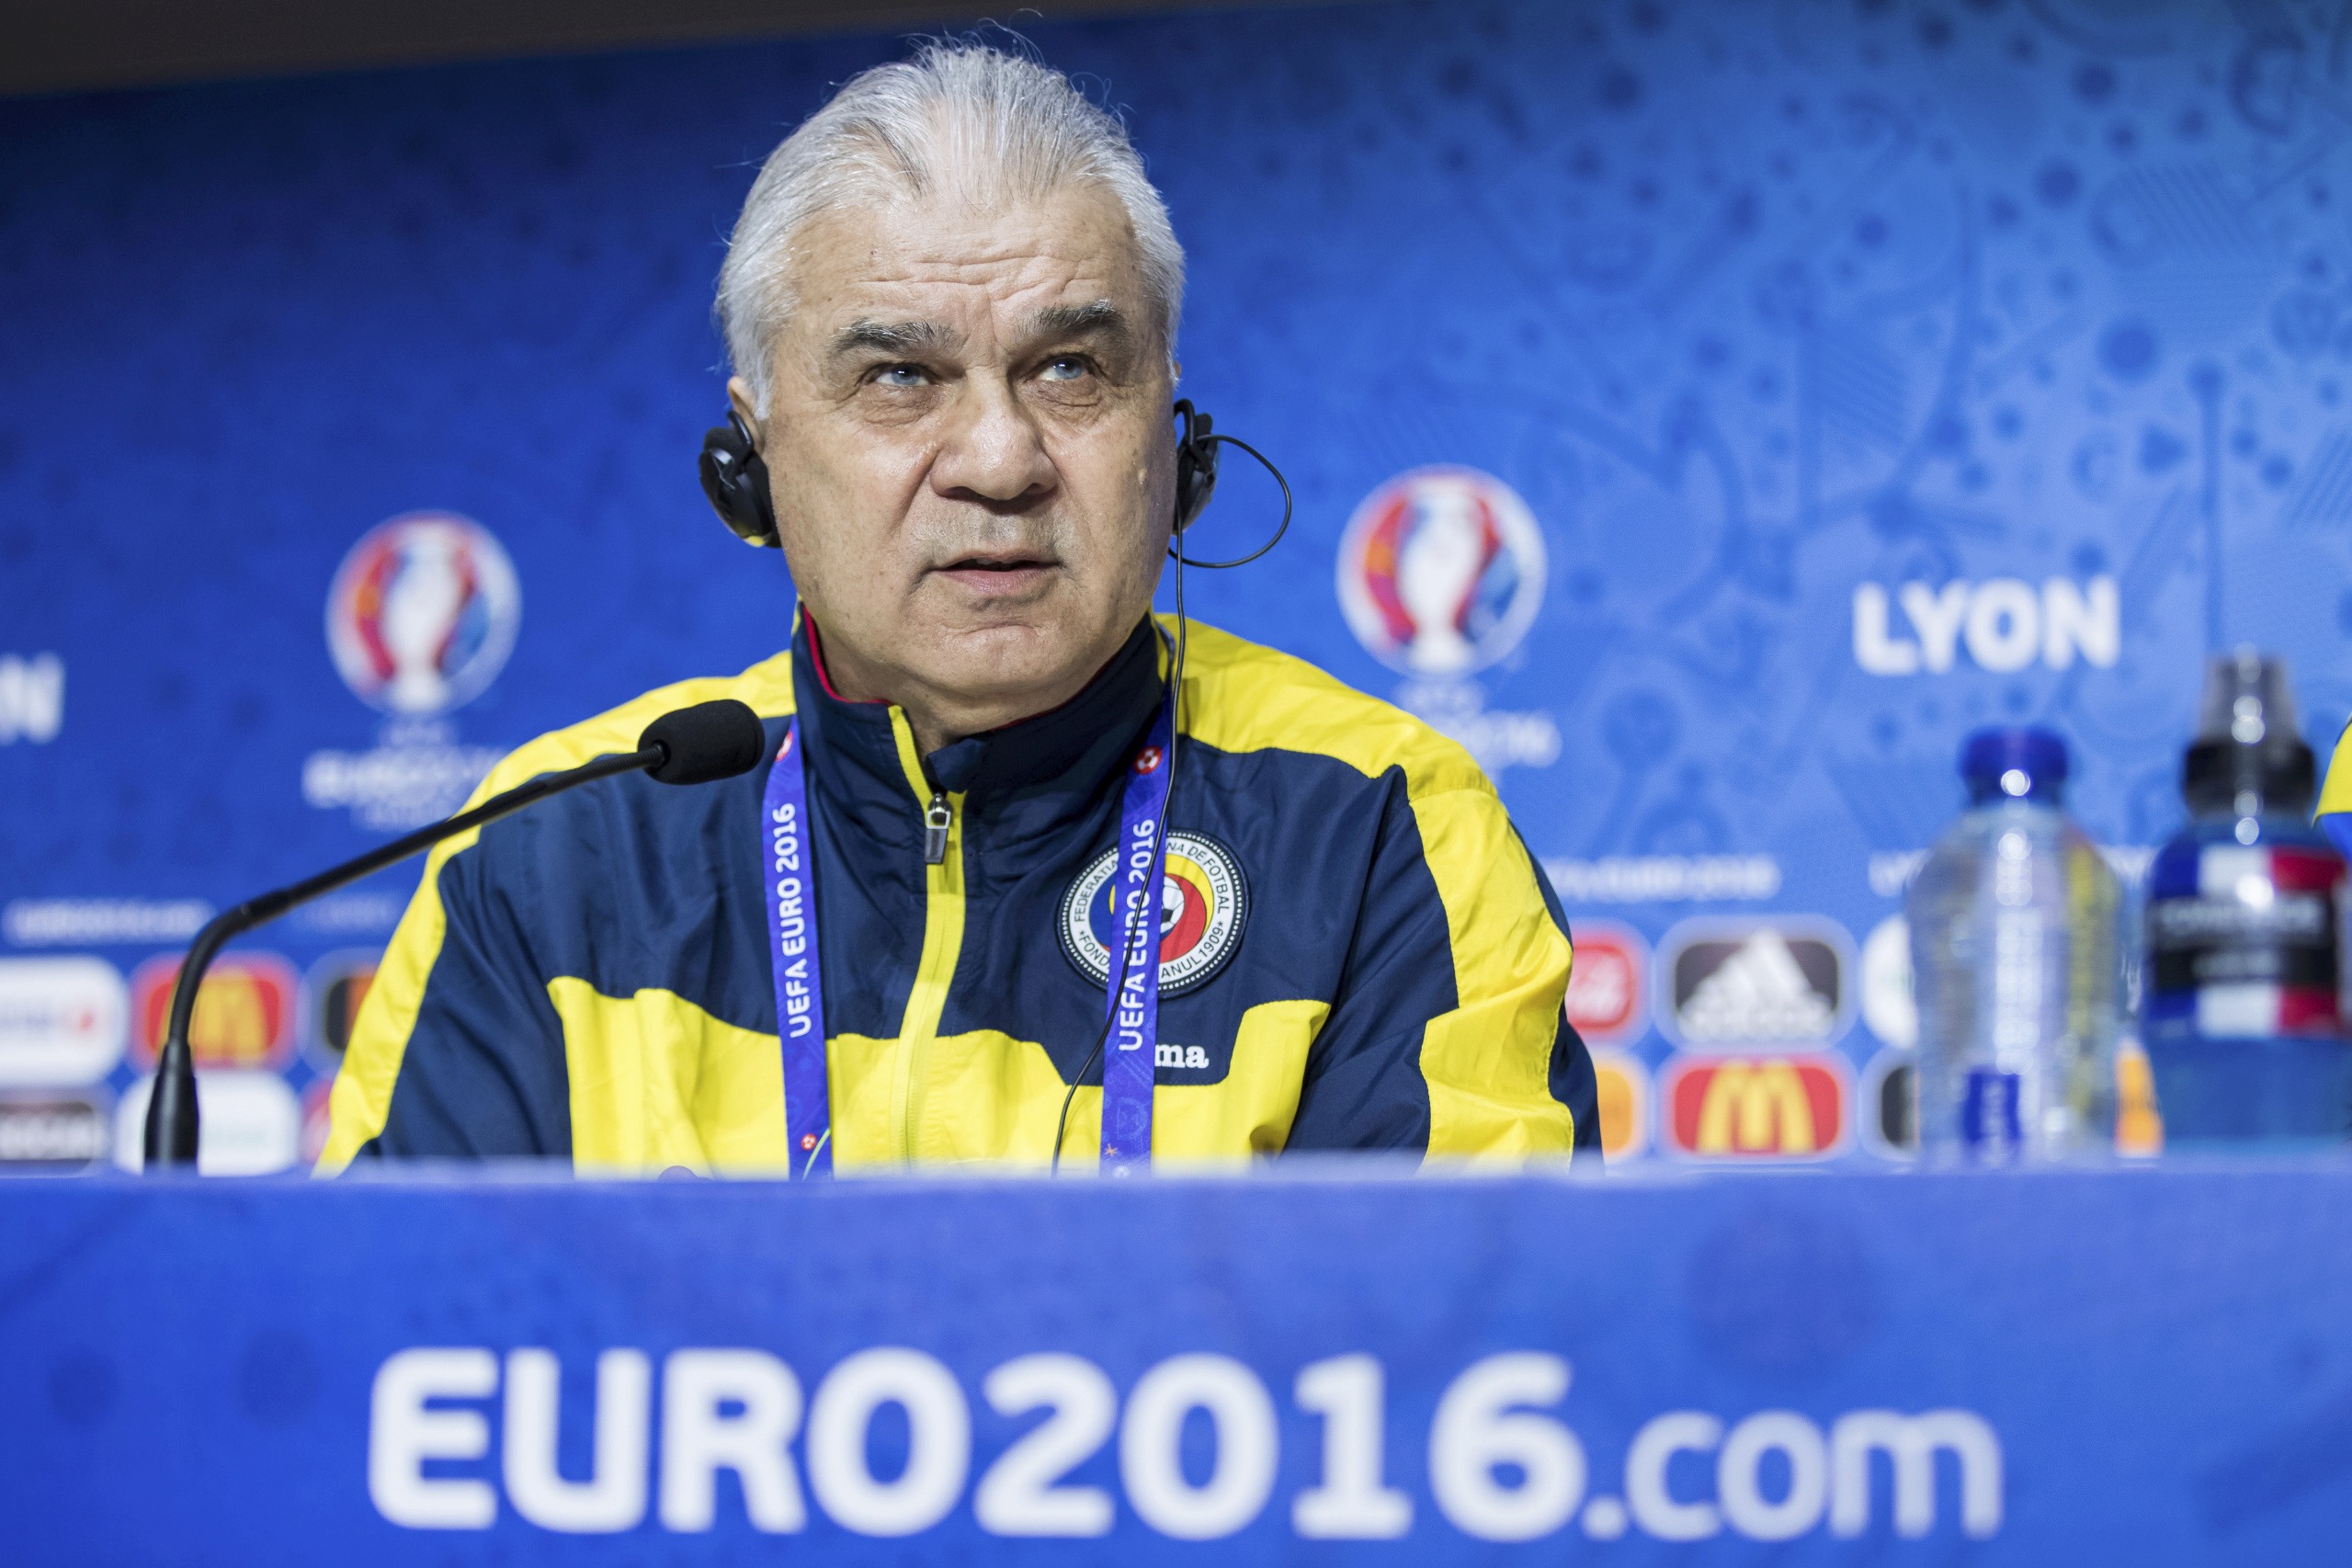 Euro 2016: Romania coach upset by training venue switch